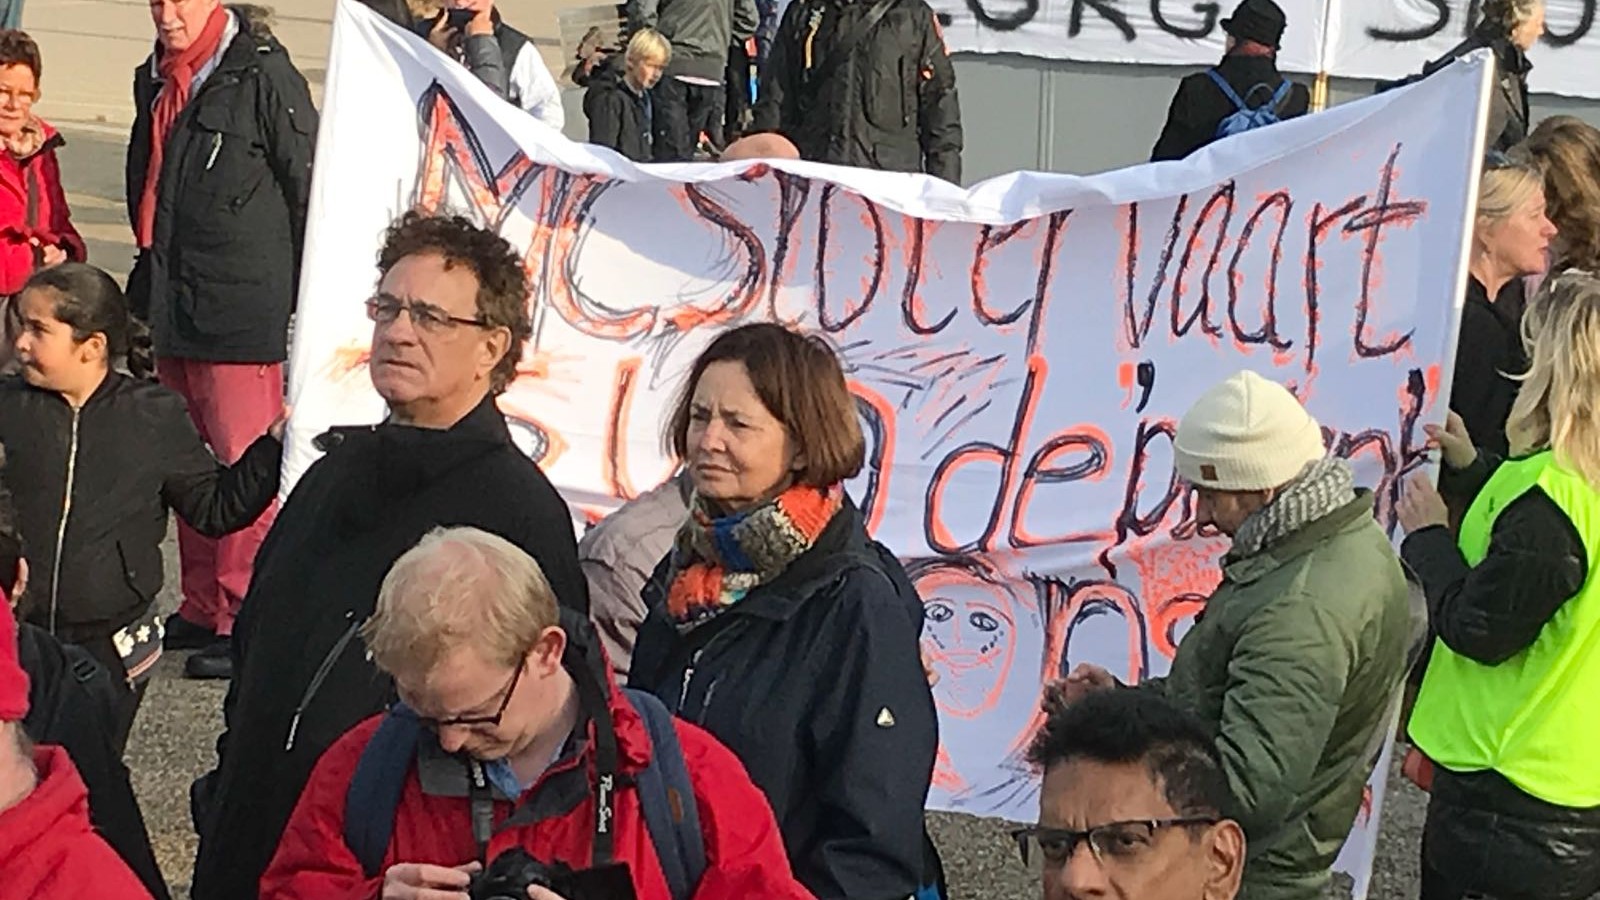 protest, mc slotervaart, museumplein, 4 november 2018